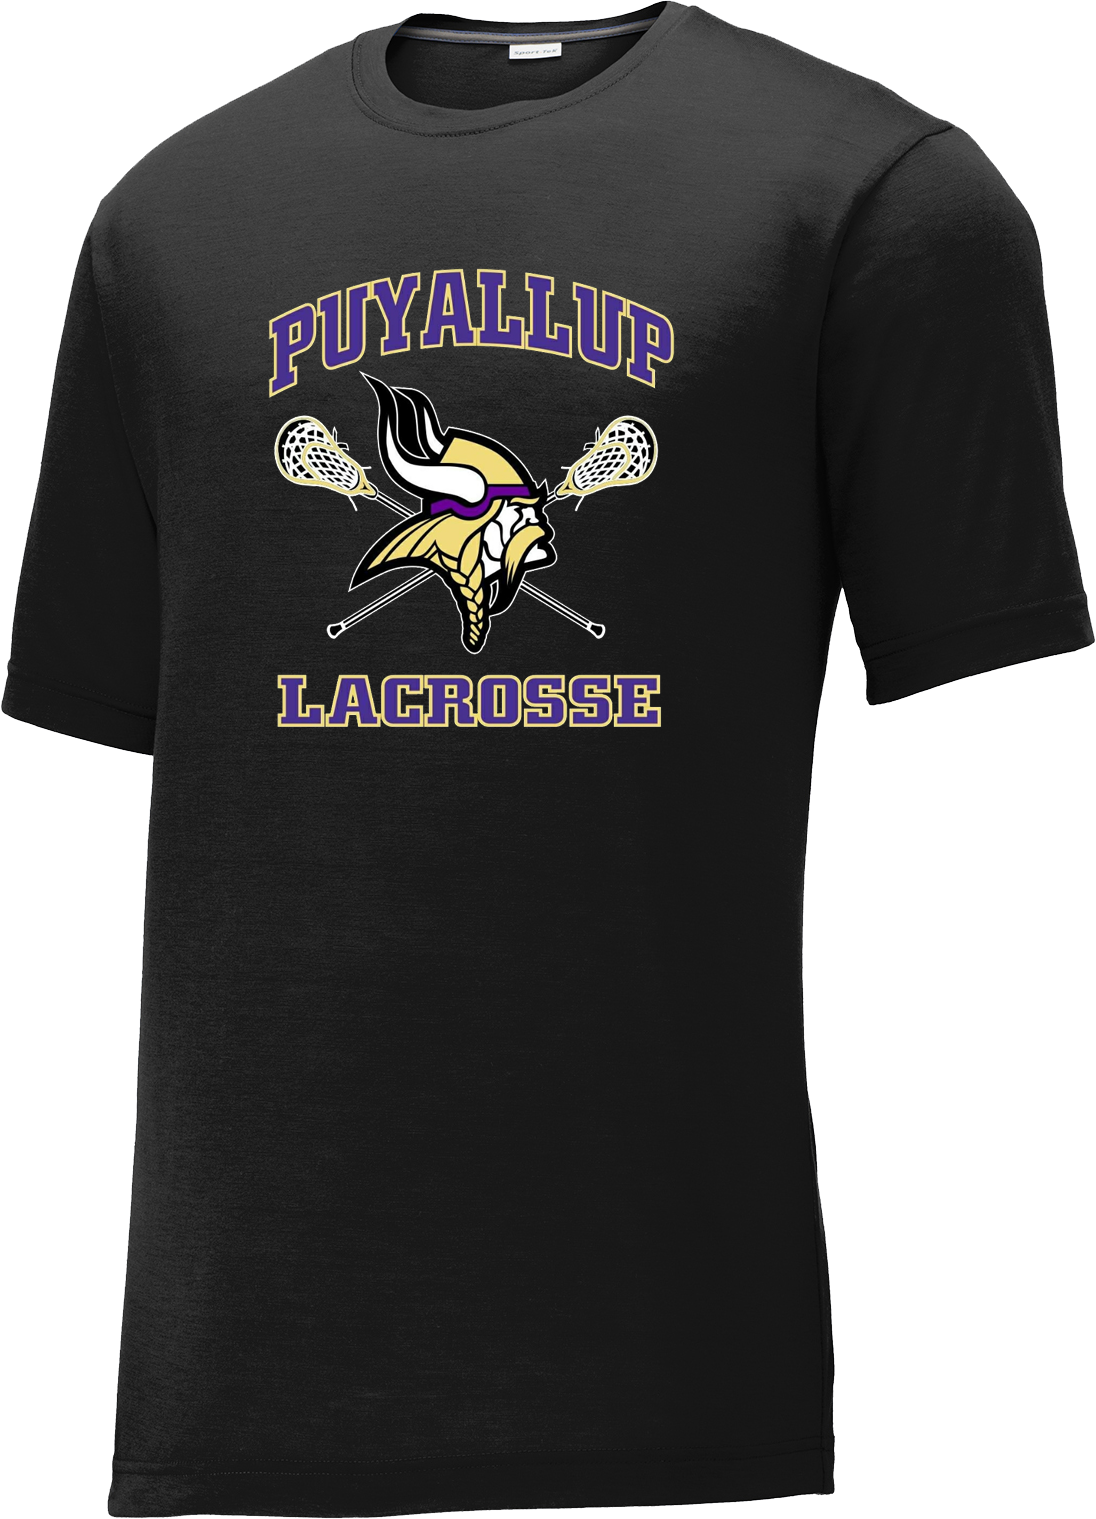 Puyallup Lacrosse Black CottonTouch Performance T-Shirt